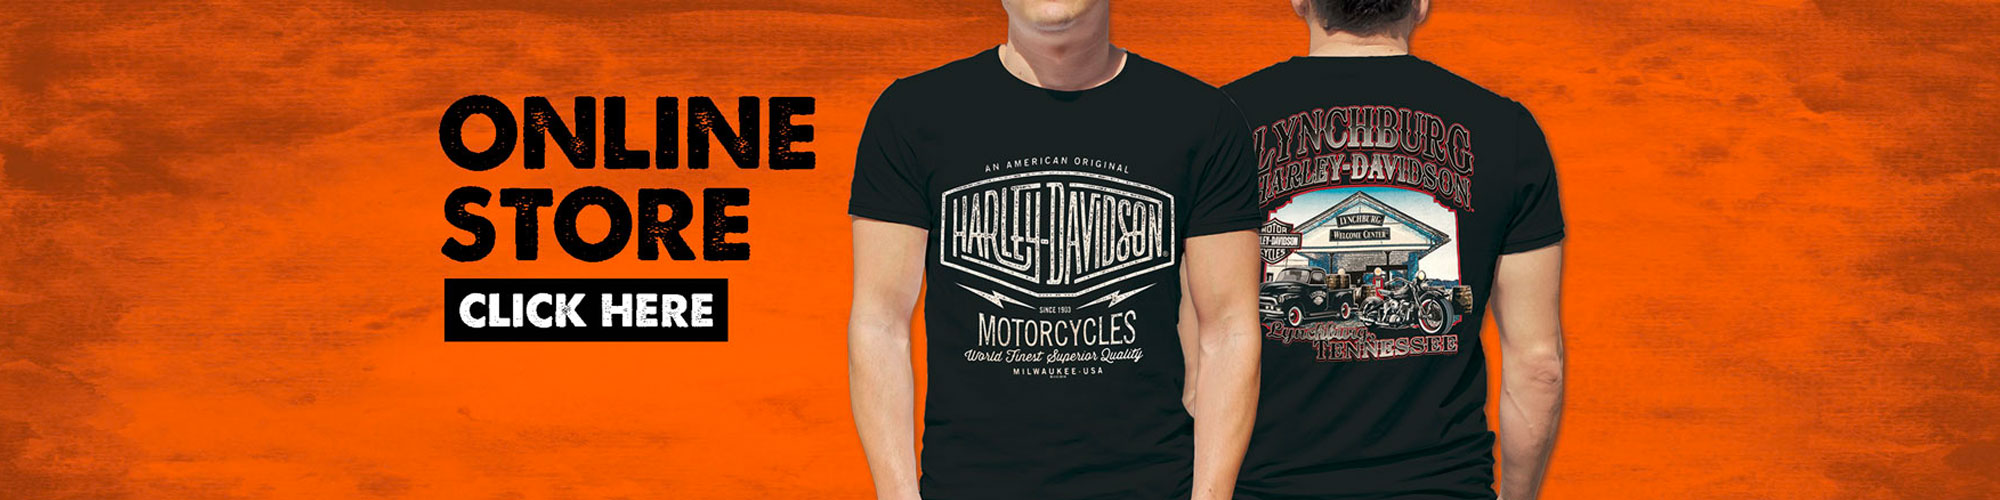 Zame Tam Okvir Harley Davidson T Shirts Online Store Yeoryia Aslanidou Com